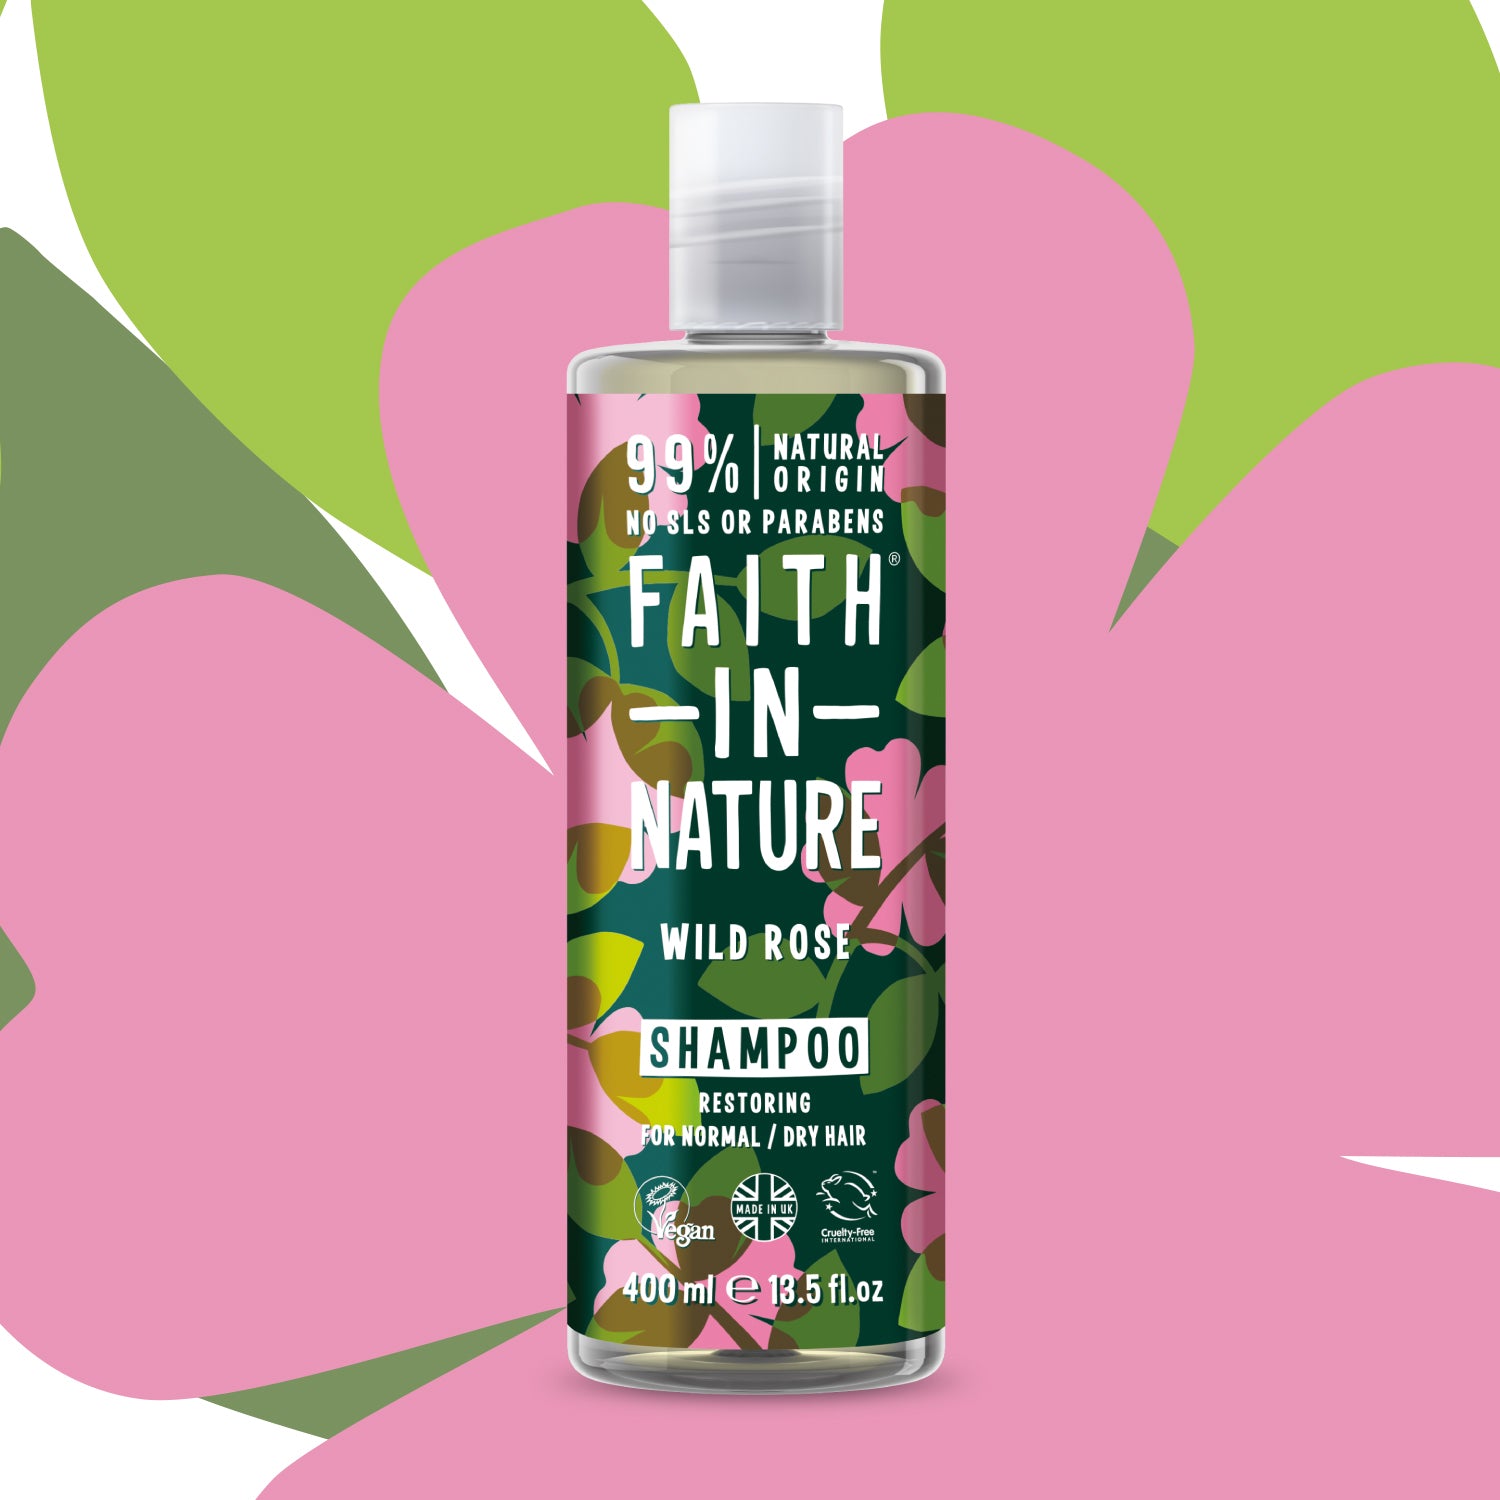 Faith in Nature Shampoo 400ml - Wild Rose